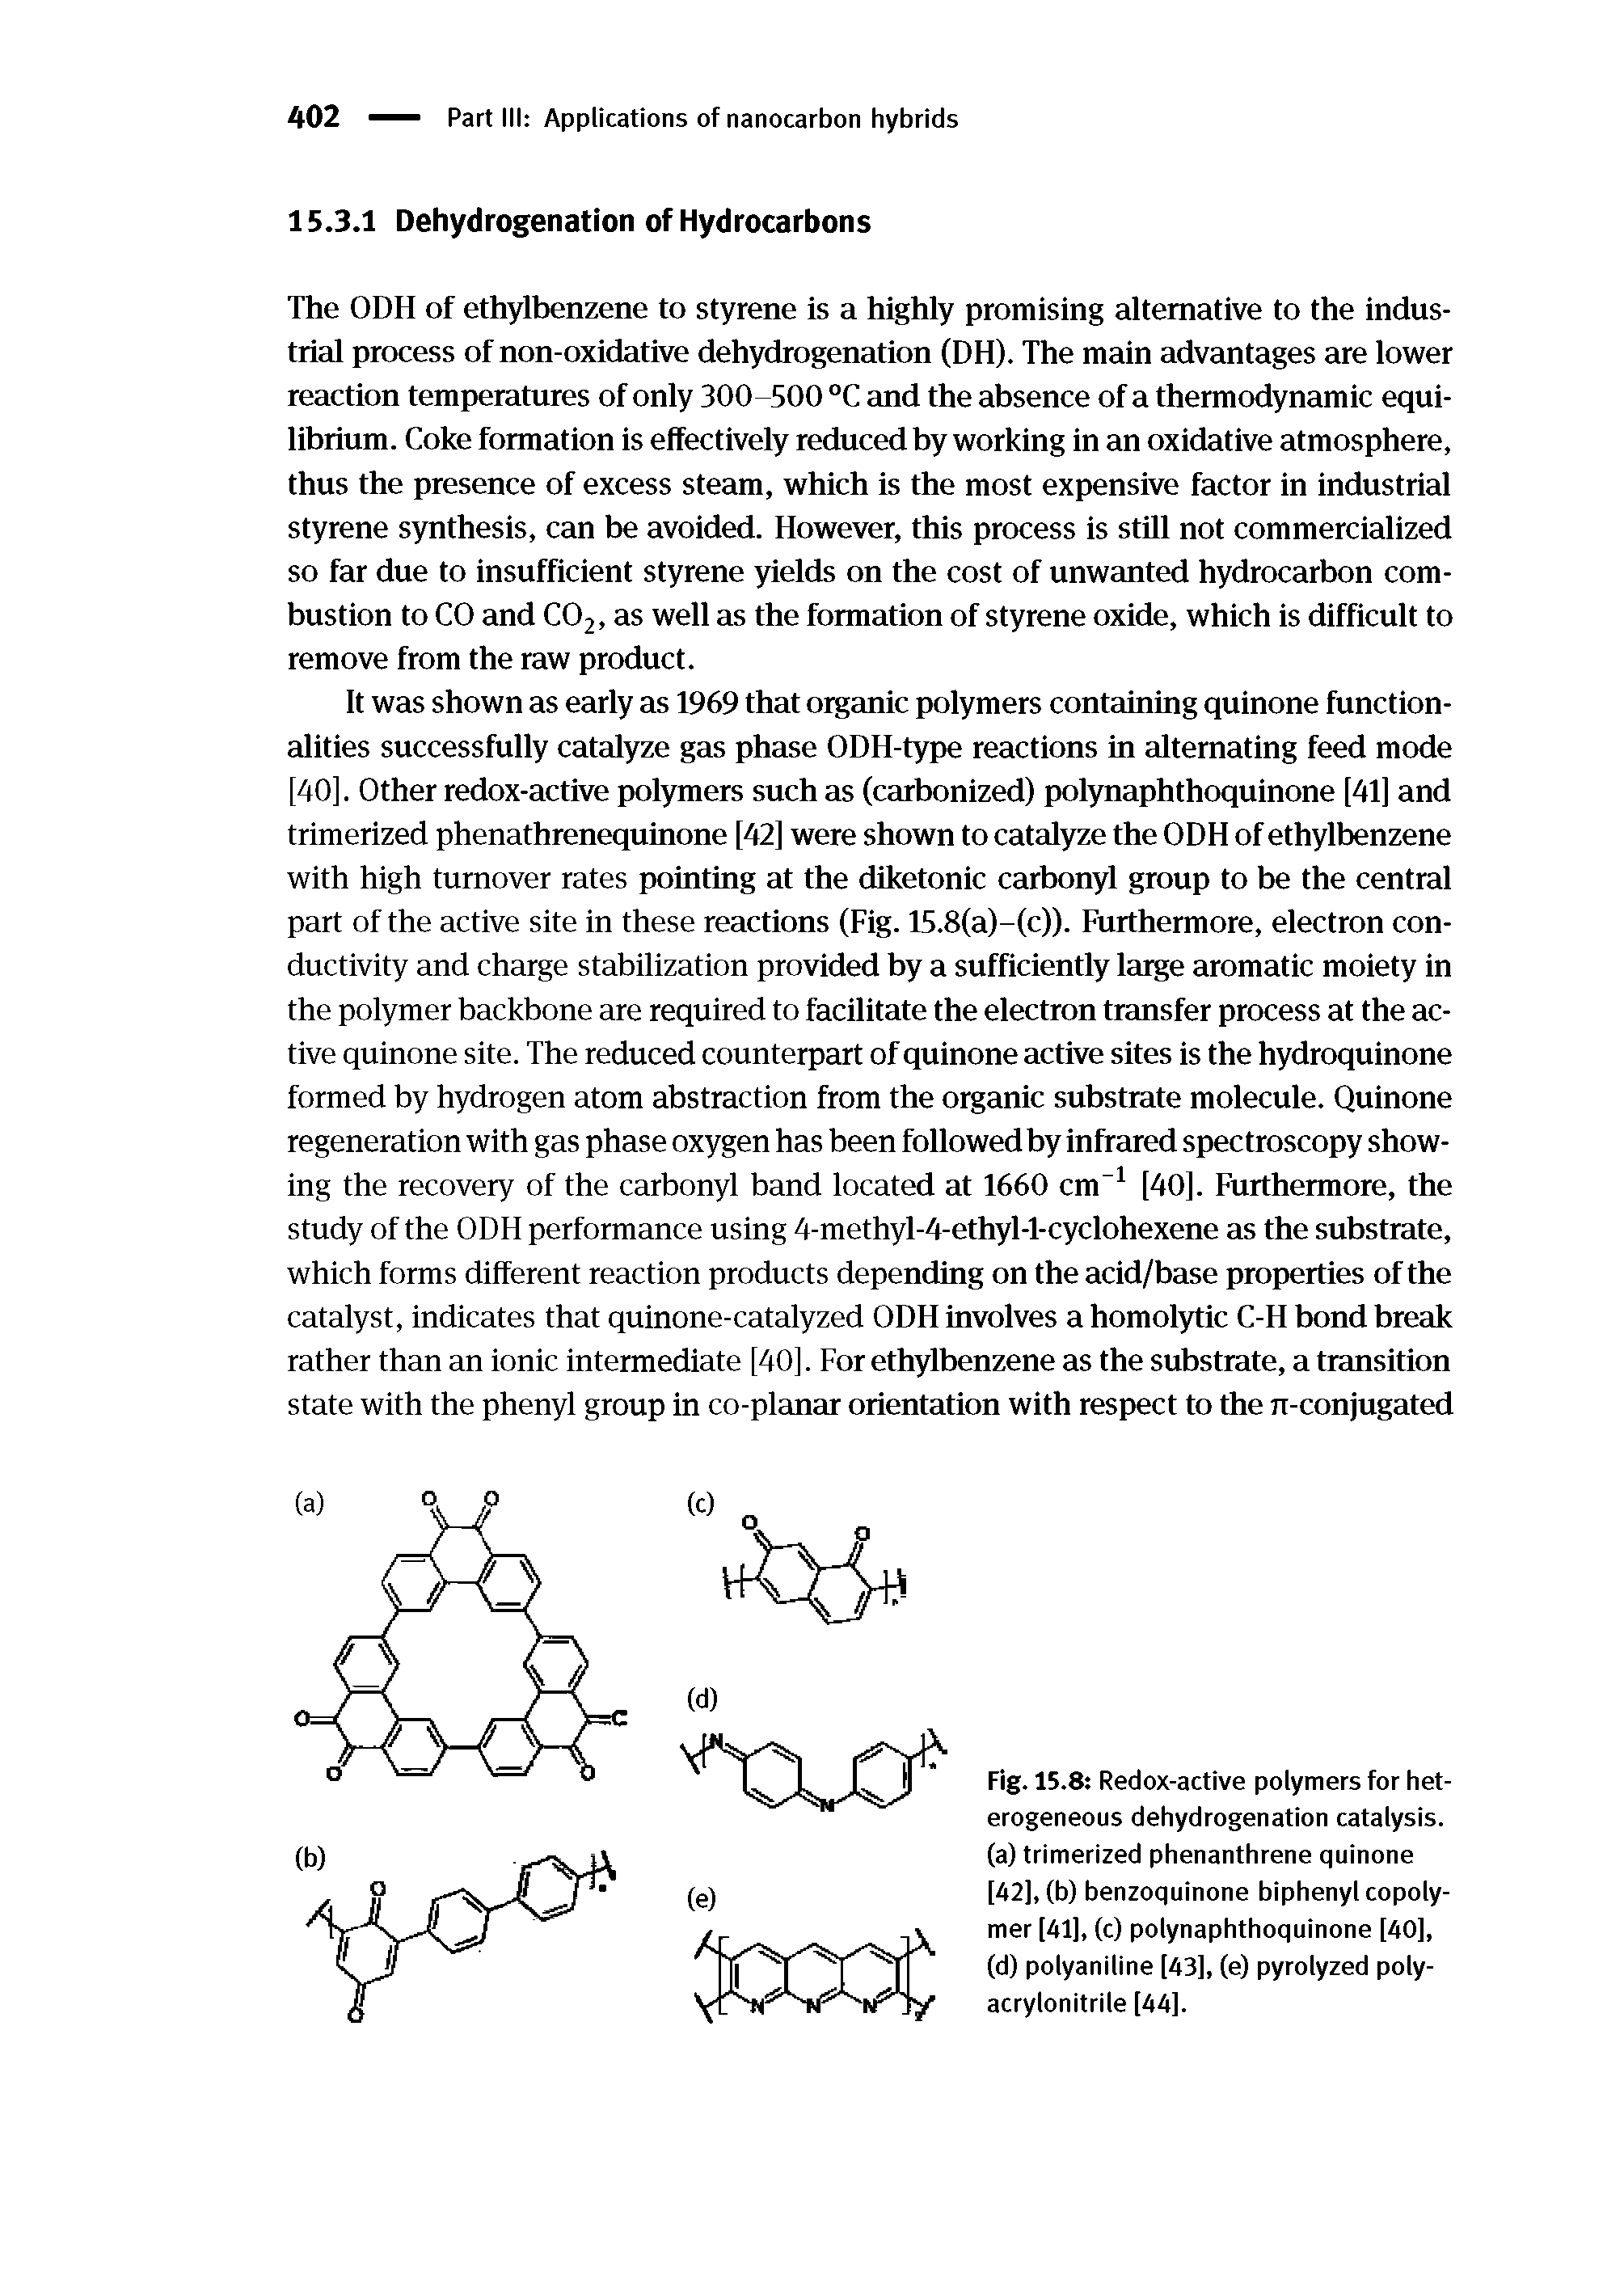 Fig. 15.8 Redox-active polymers for heterogeneous dehydrogenation catalysis, (a) trimerized phenanthrene quinone [42], (b) benzoquinone biphenyl copolymer [41], (c) polynaphthoquinone [40], (d) polyaniline [43], (e) pyrolyzed polyacrylonitrile [44].